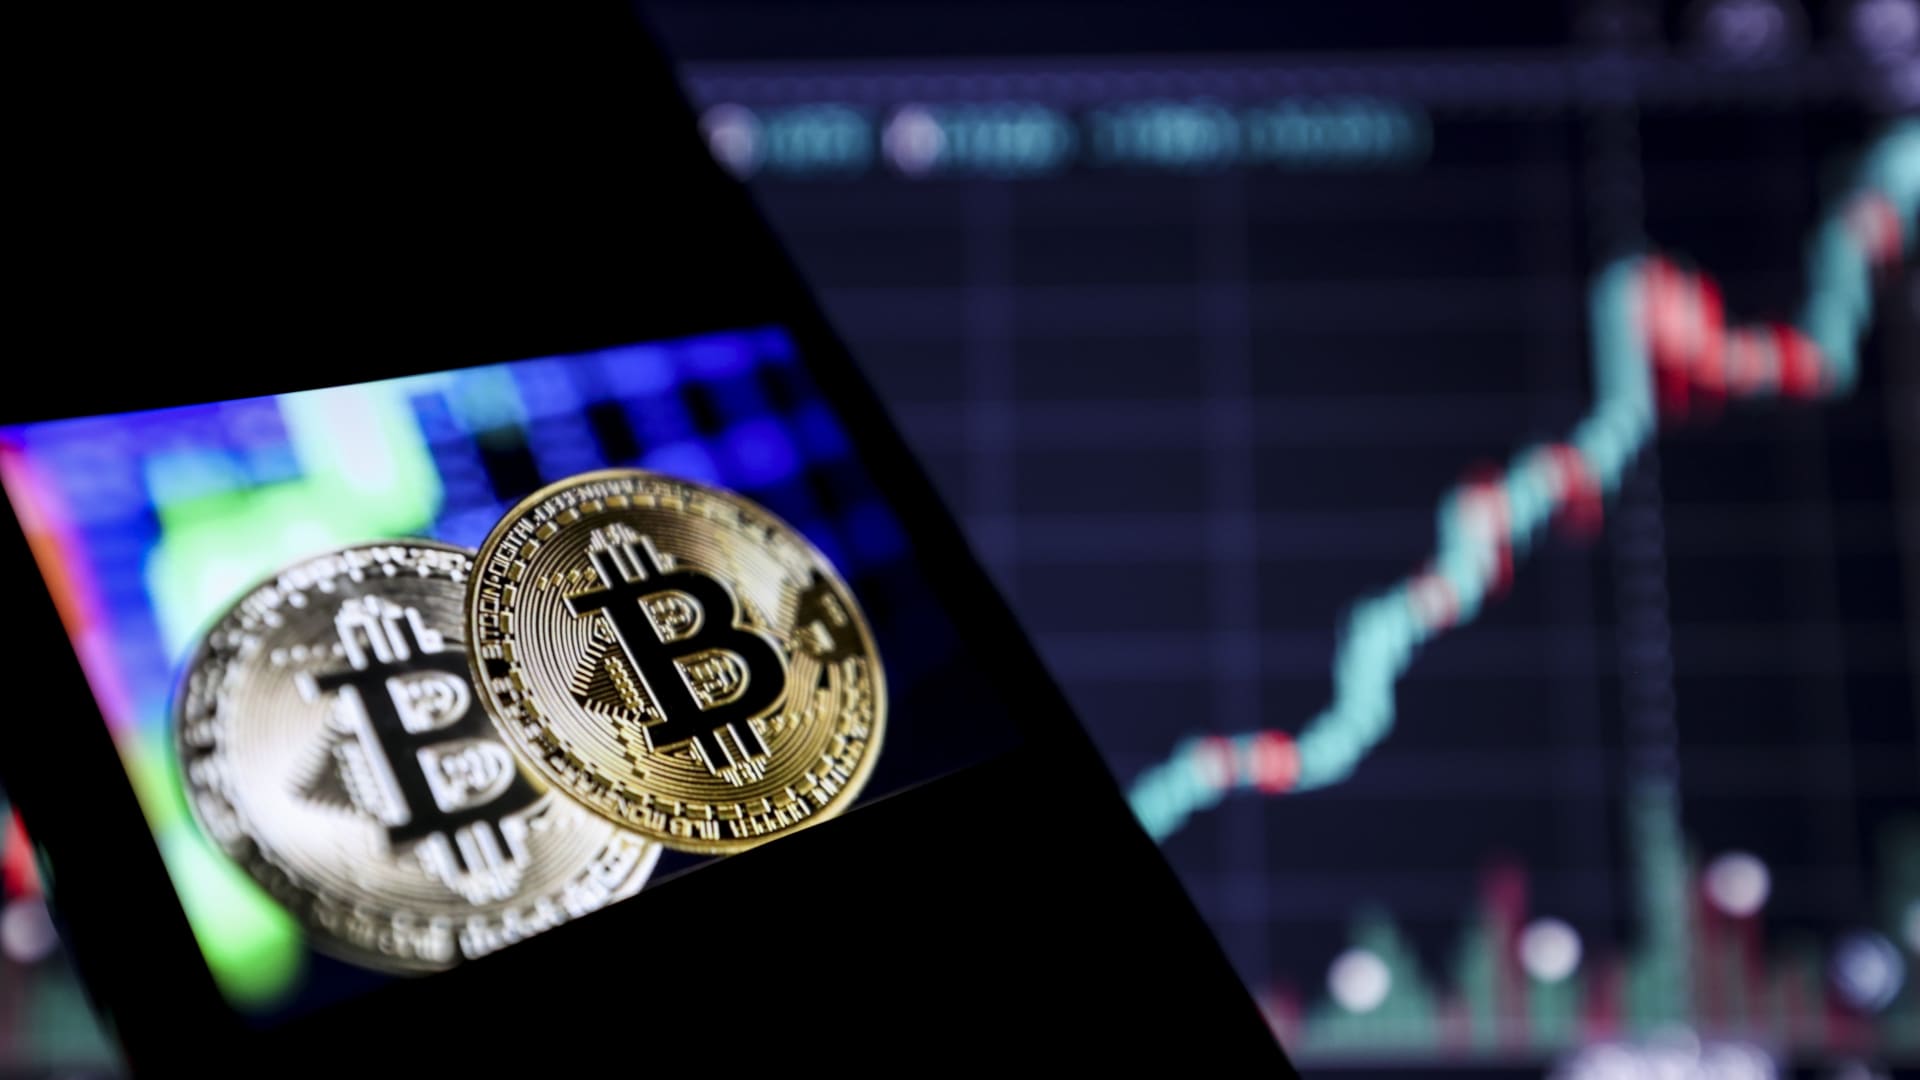 Bitcoin (BTC) tops $22,000, ethereum jumps as crypto market rallies